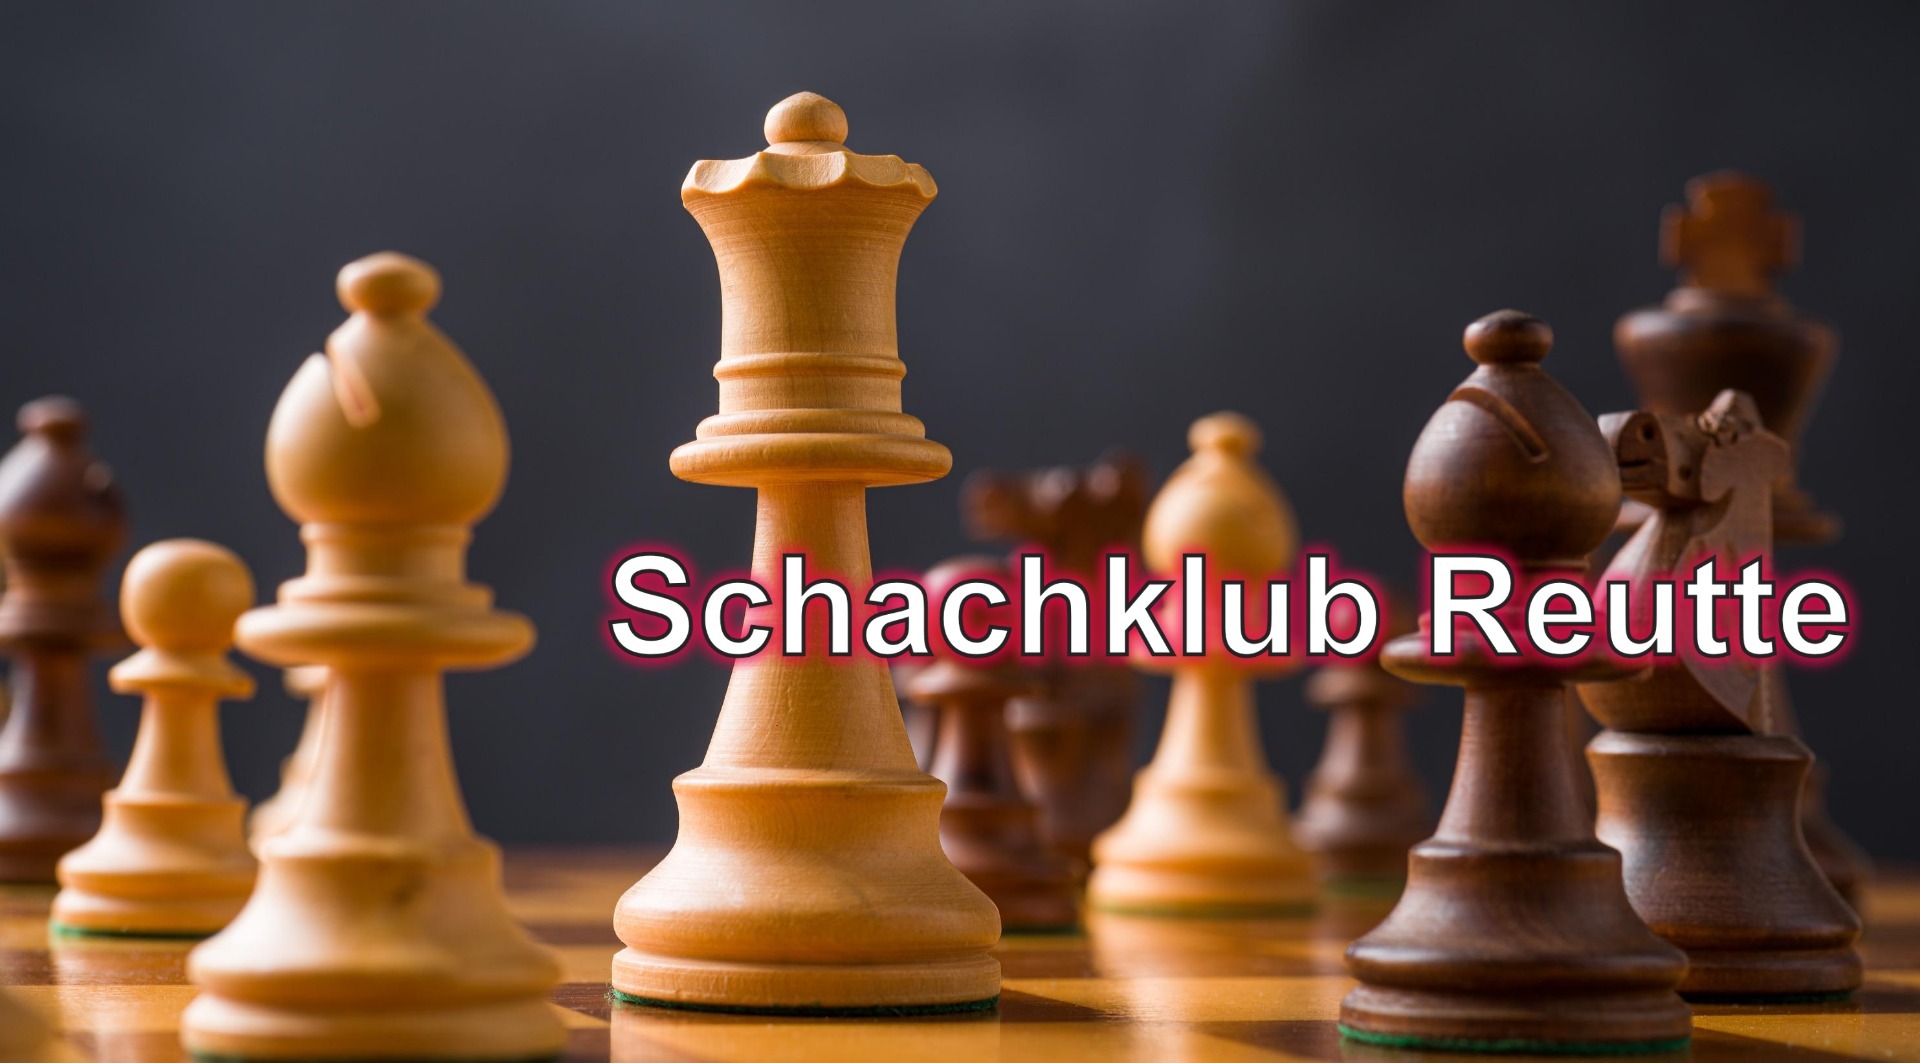 Schachklub Reutte